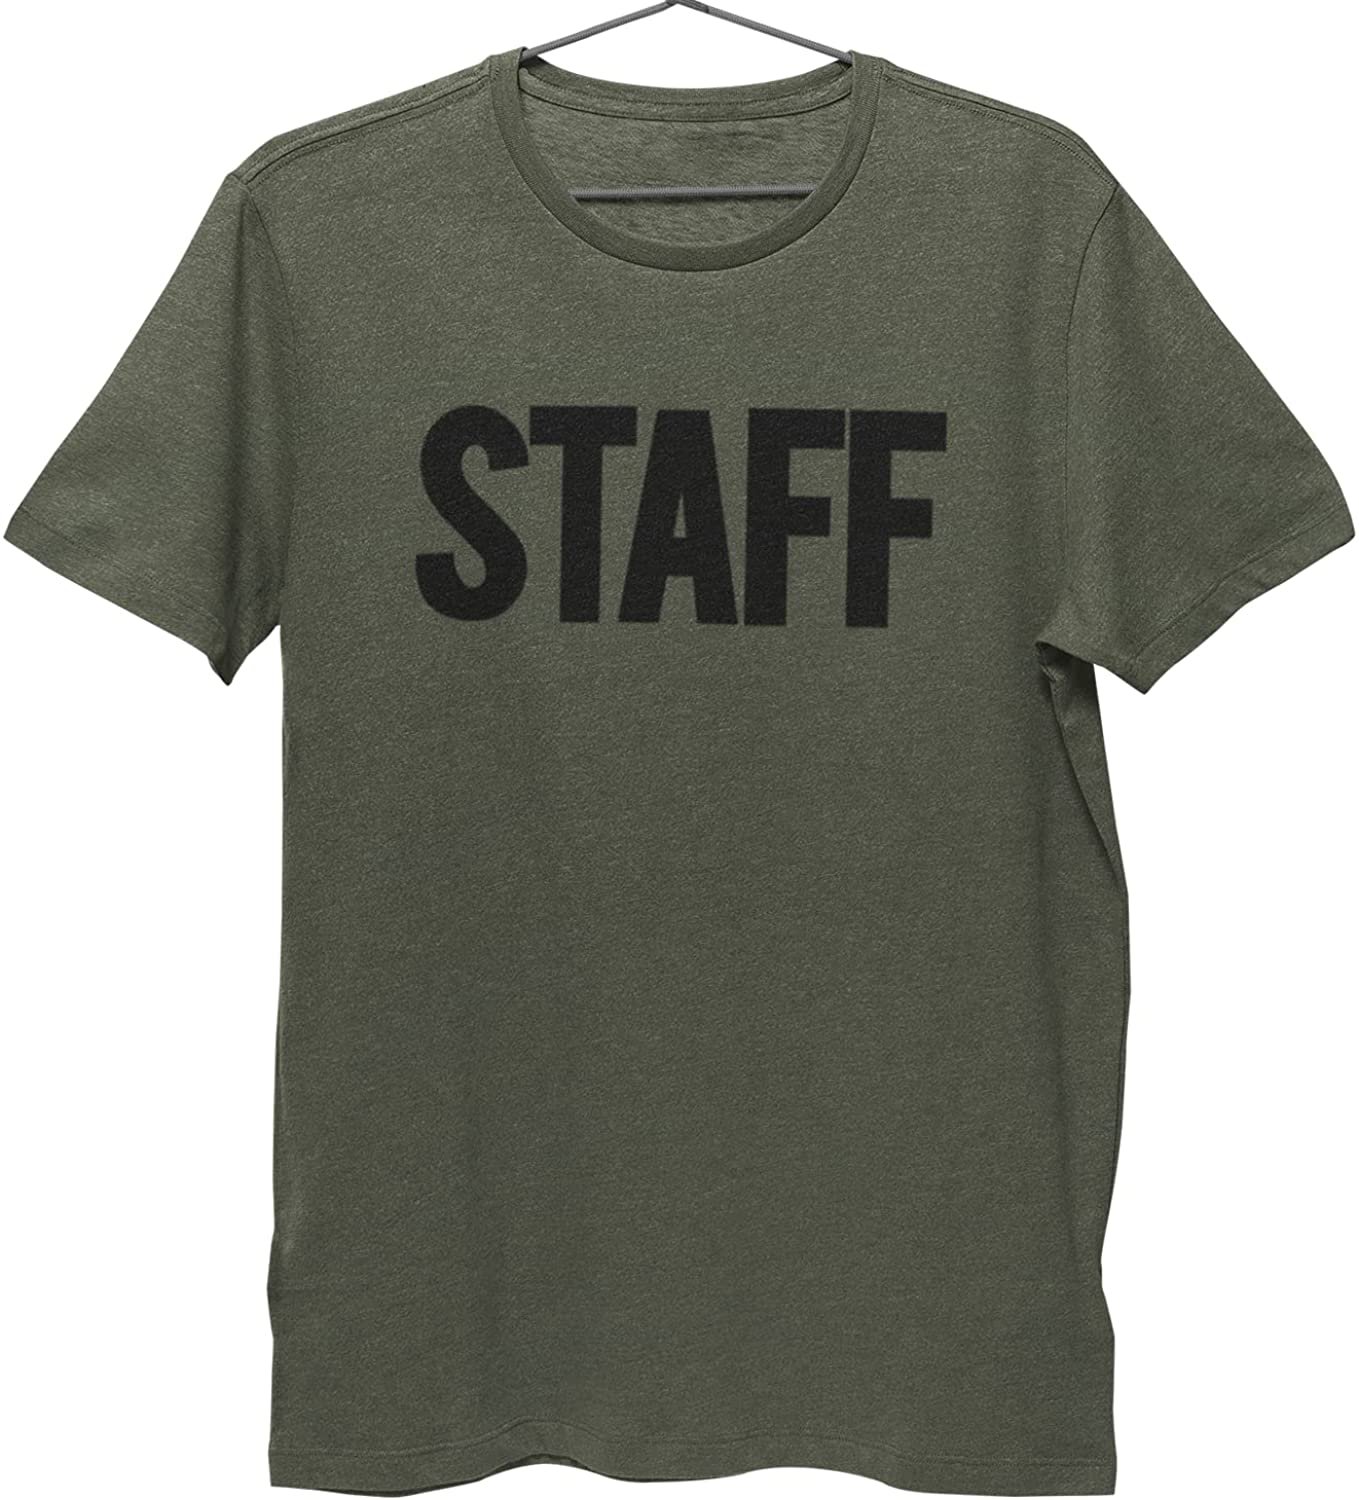 NYC FACTORY Men's Staff T-Shirt Front Back Print Tee Event Uniform Screen Printed Tshirt